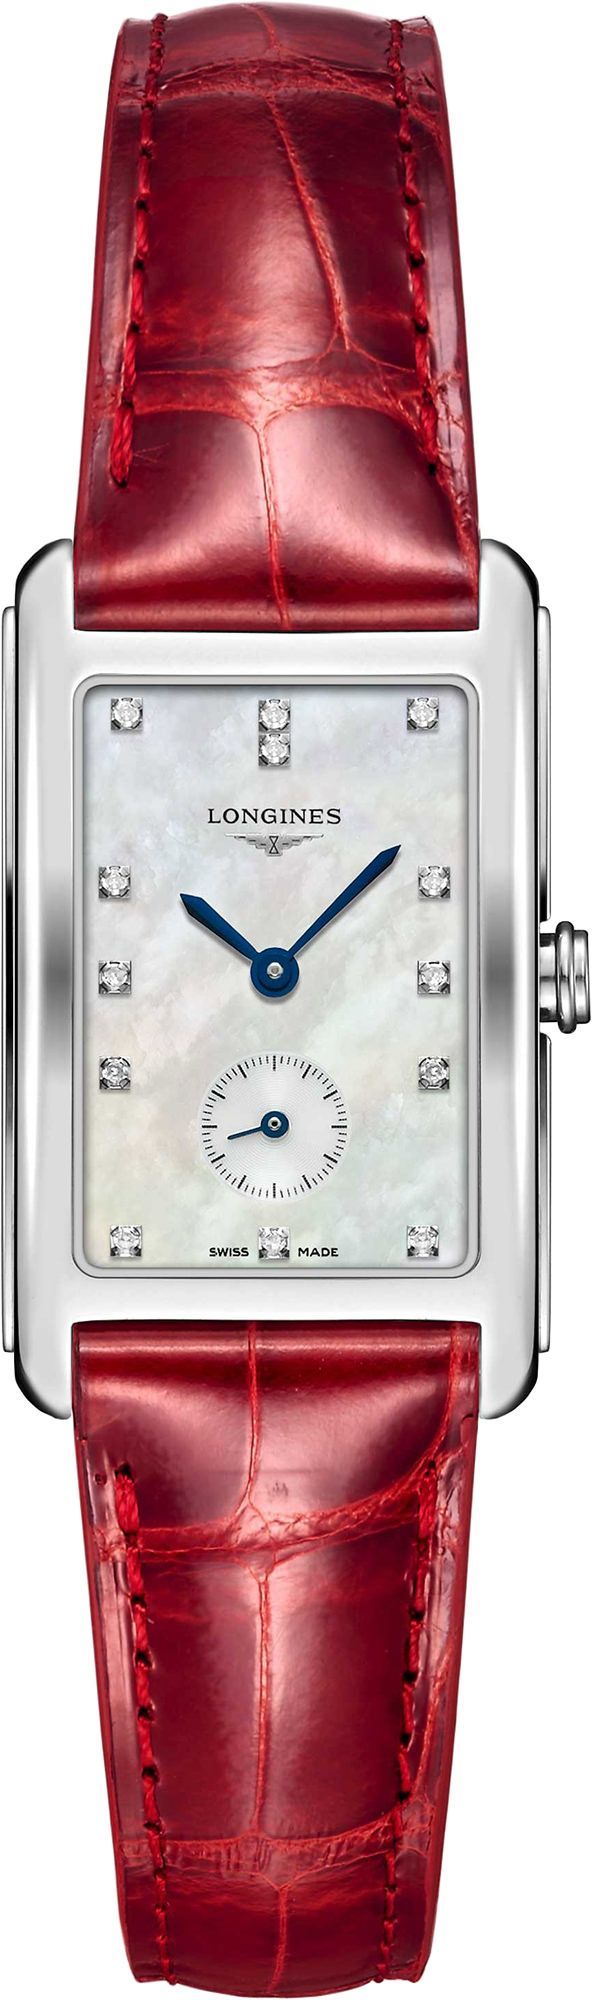 Longines  23x37 mm Watch in MOP Dial For Women - 1